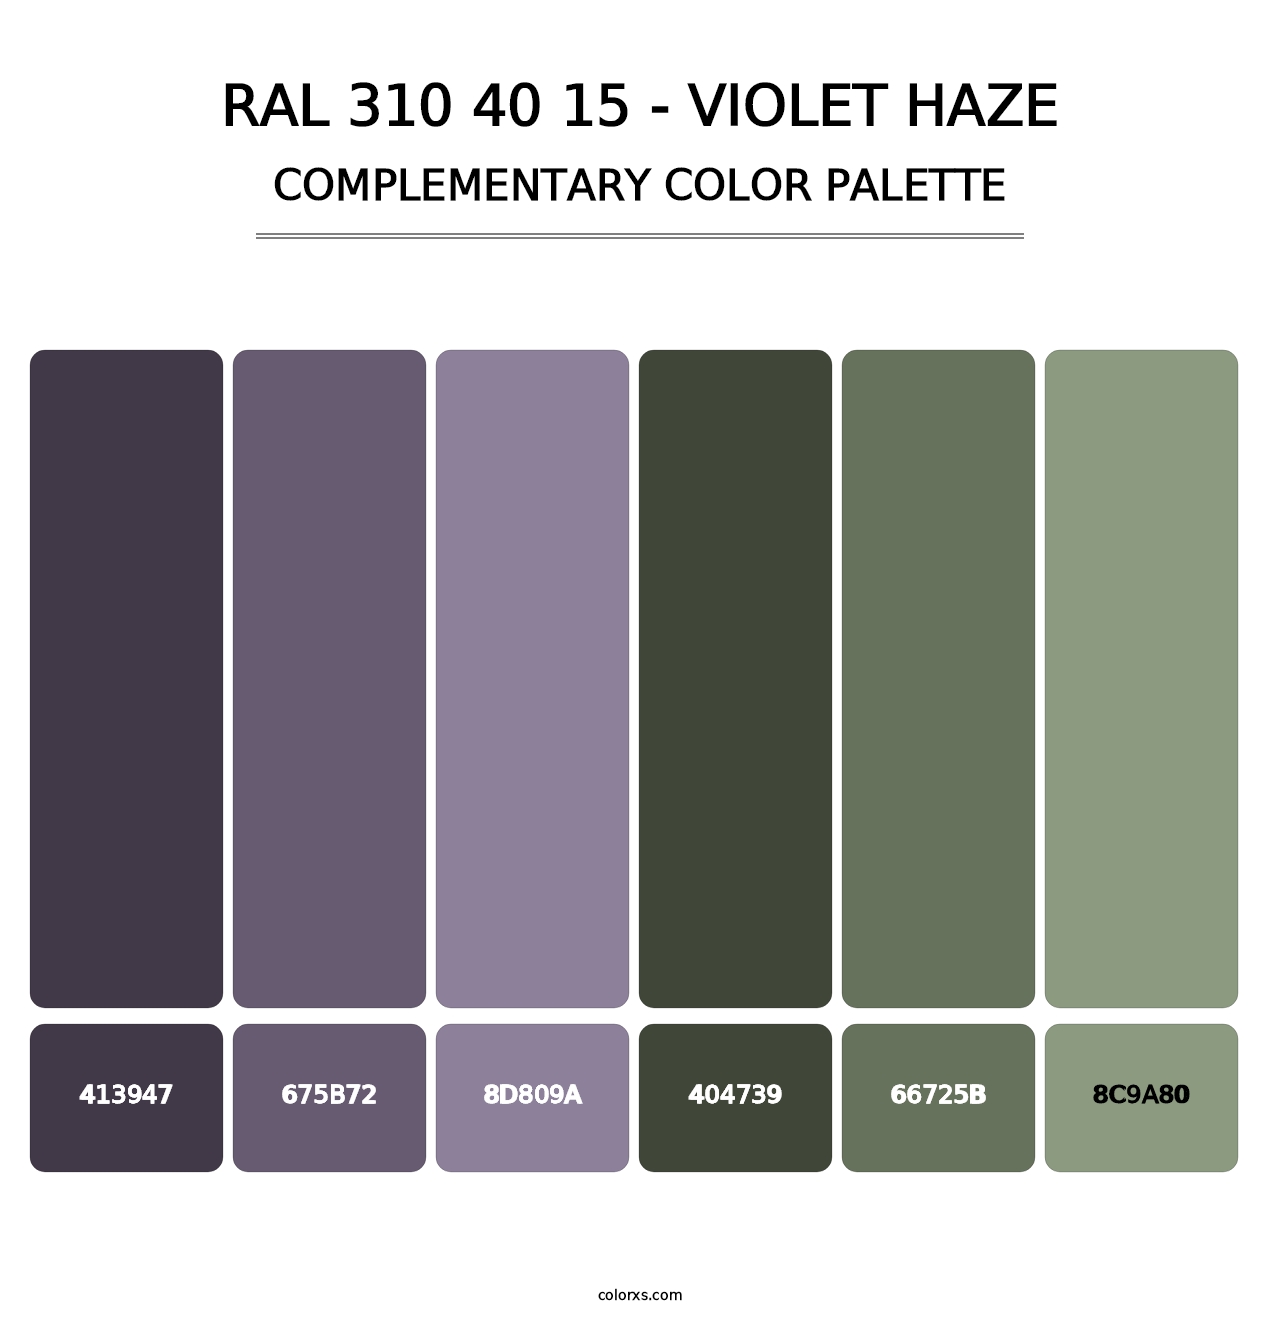 RAL 310 40 15 - Violet Haze - Complementary Color Palette